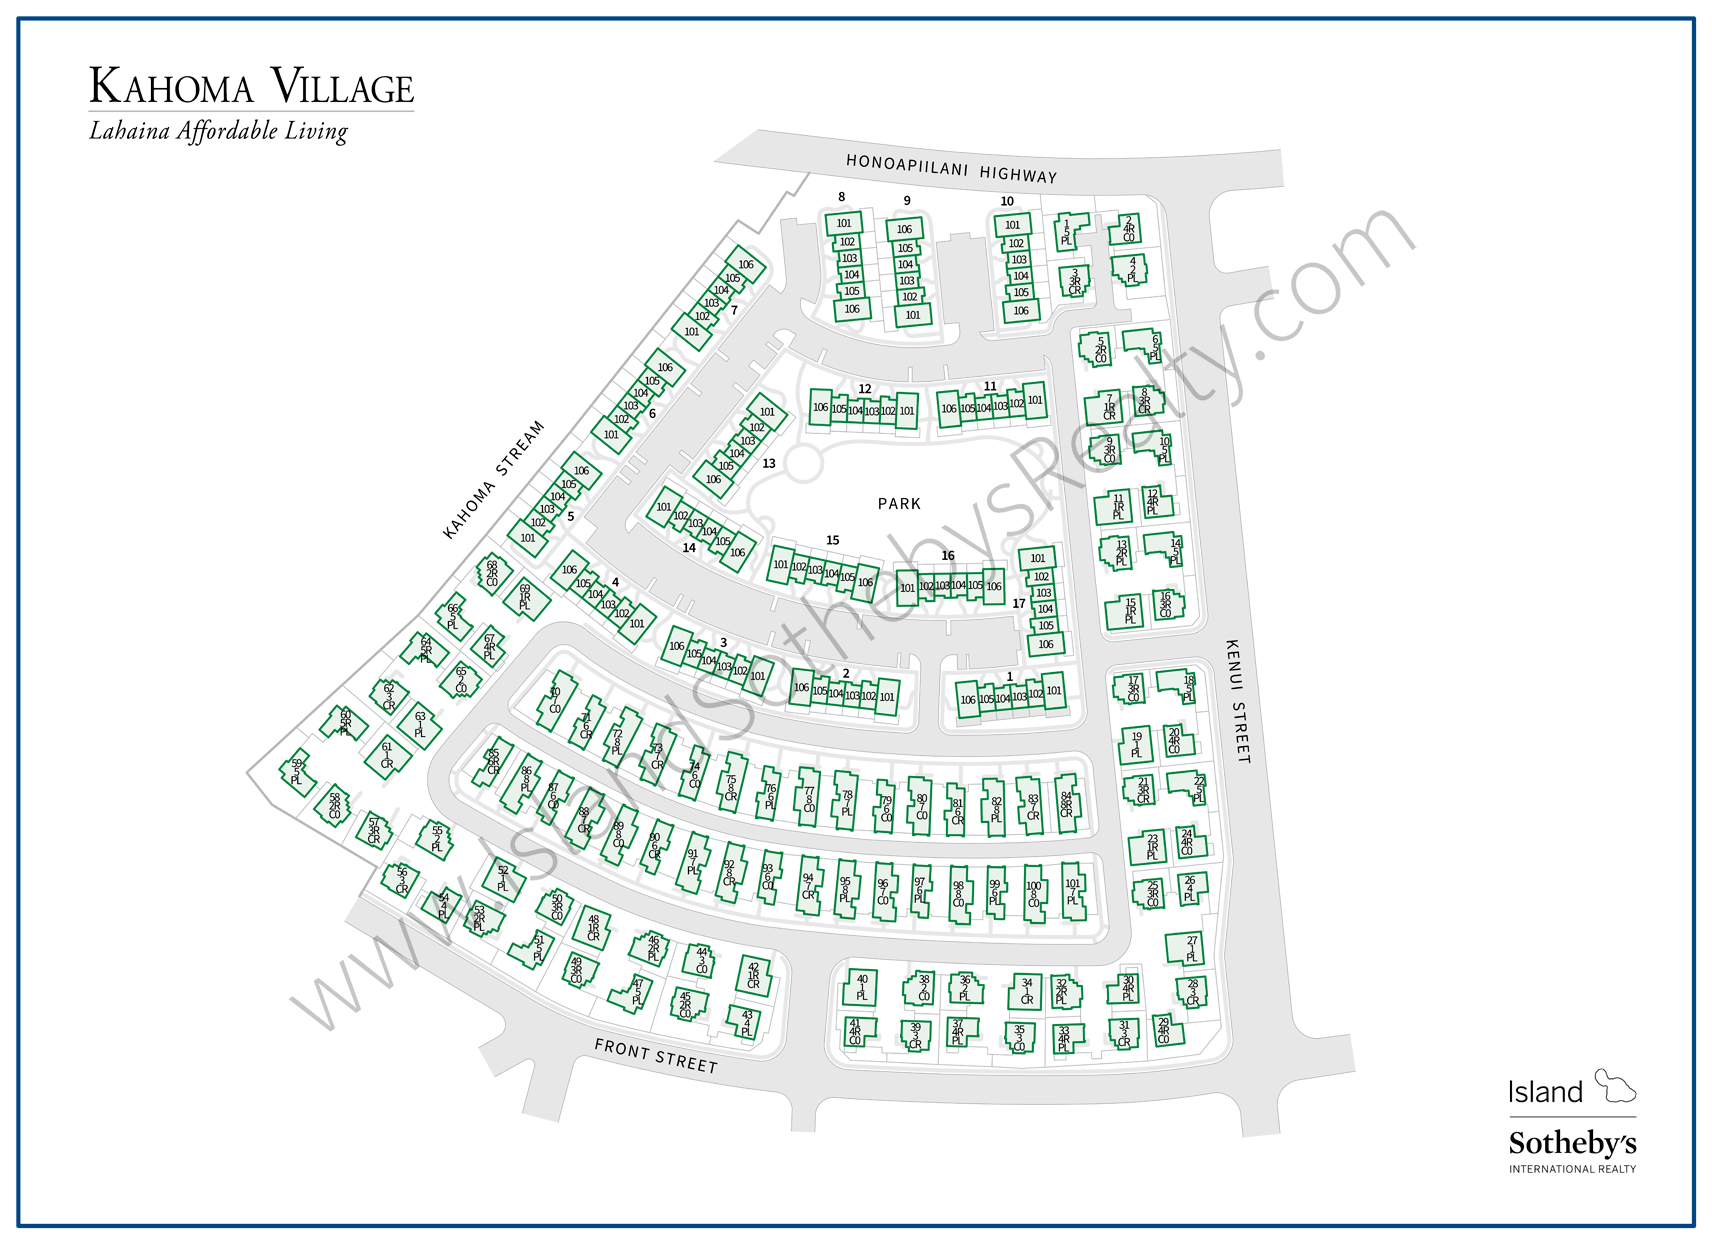 Map of Kahoma Village Maui